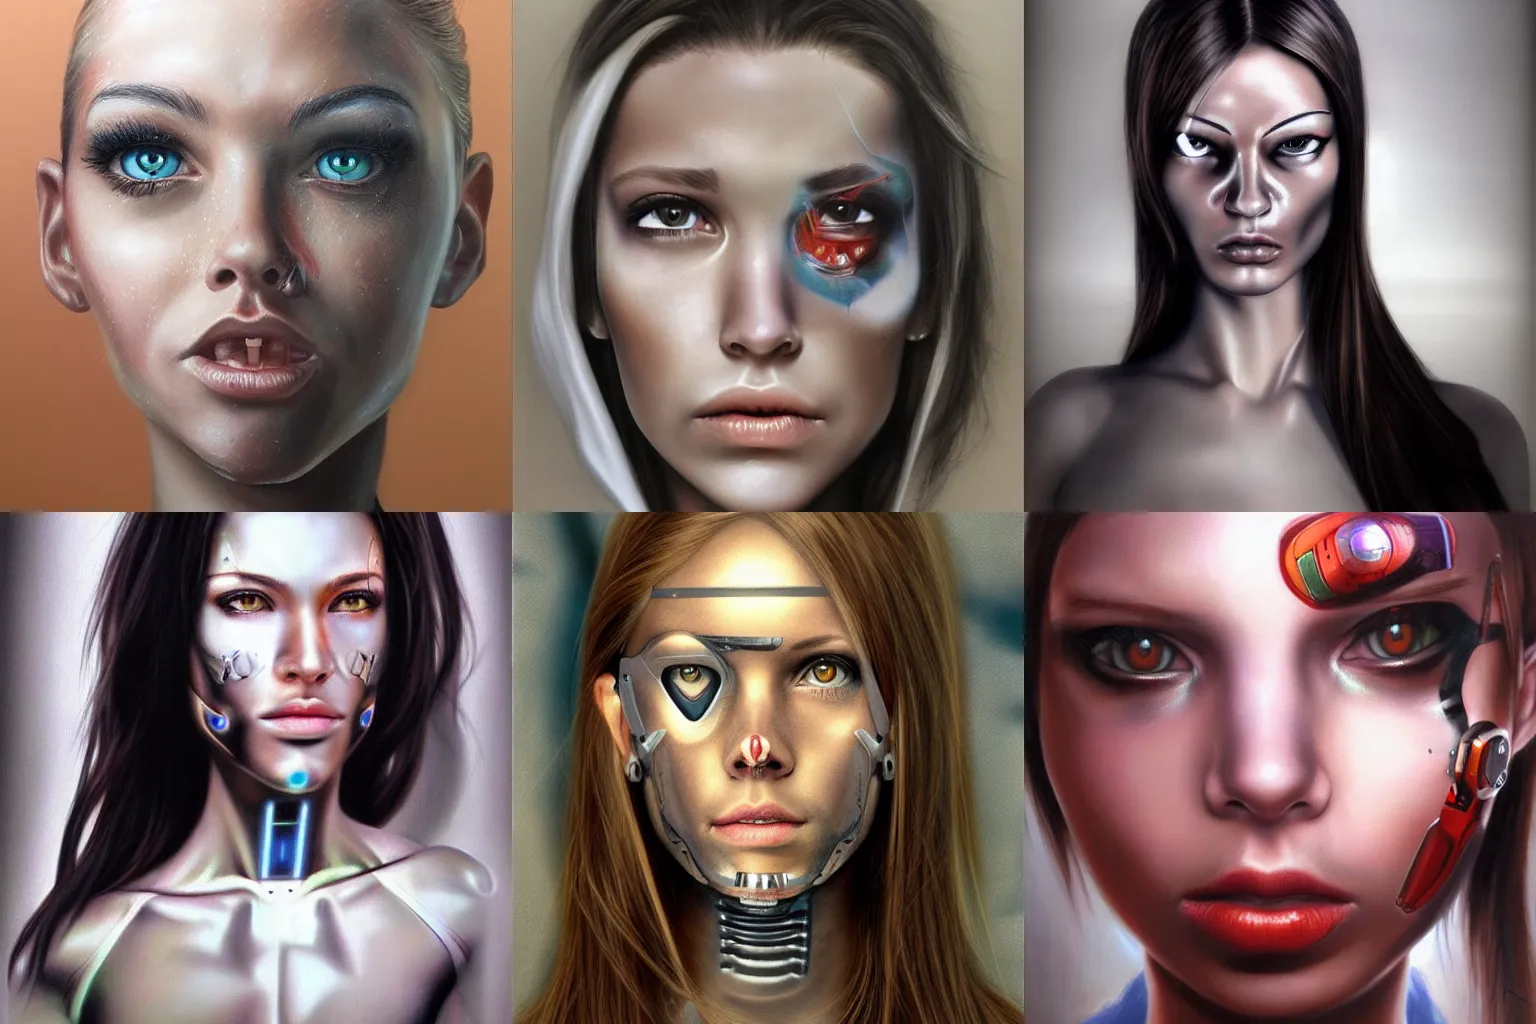 Prompt: cyborg girl, hyper realism, realistic,